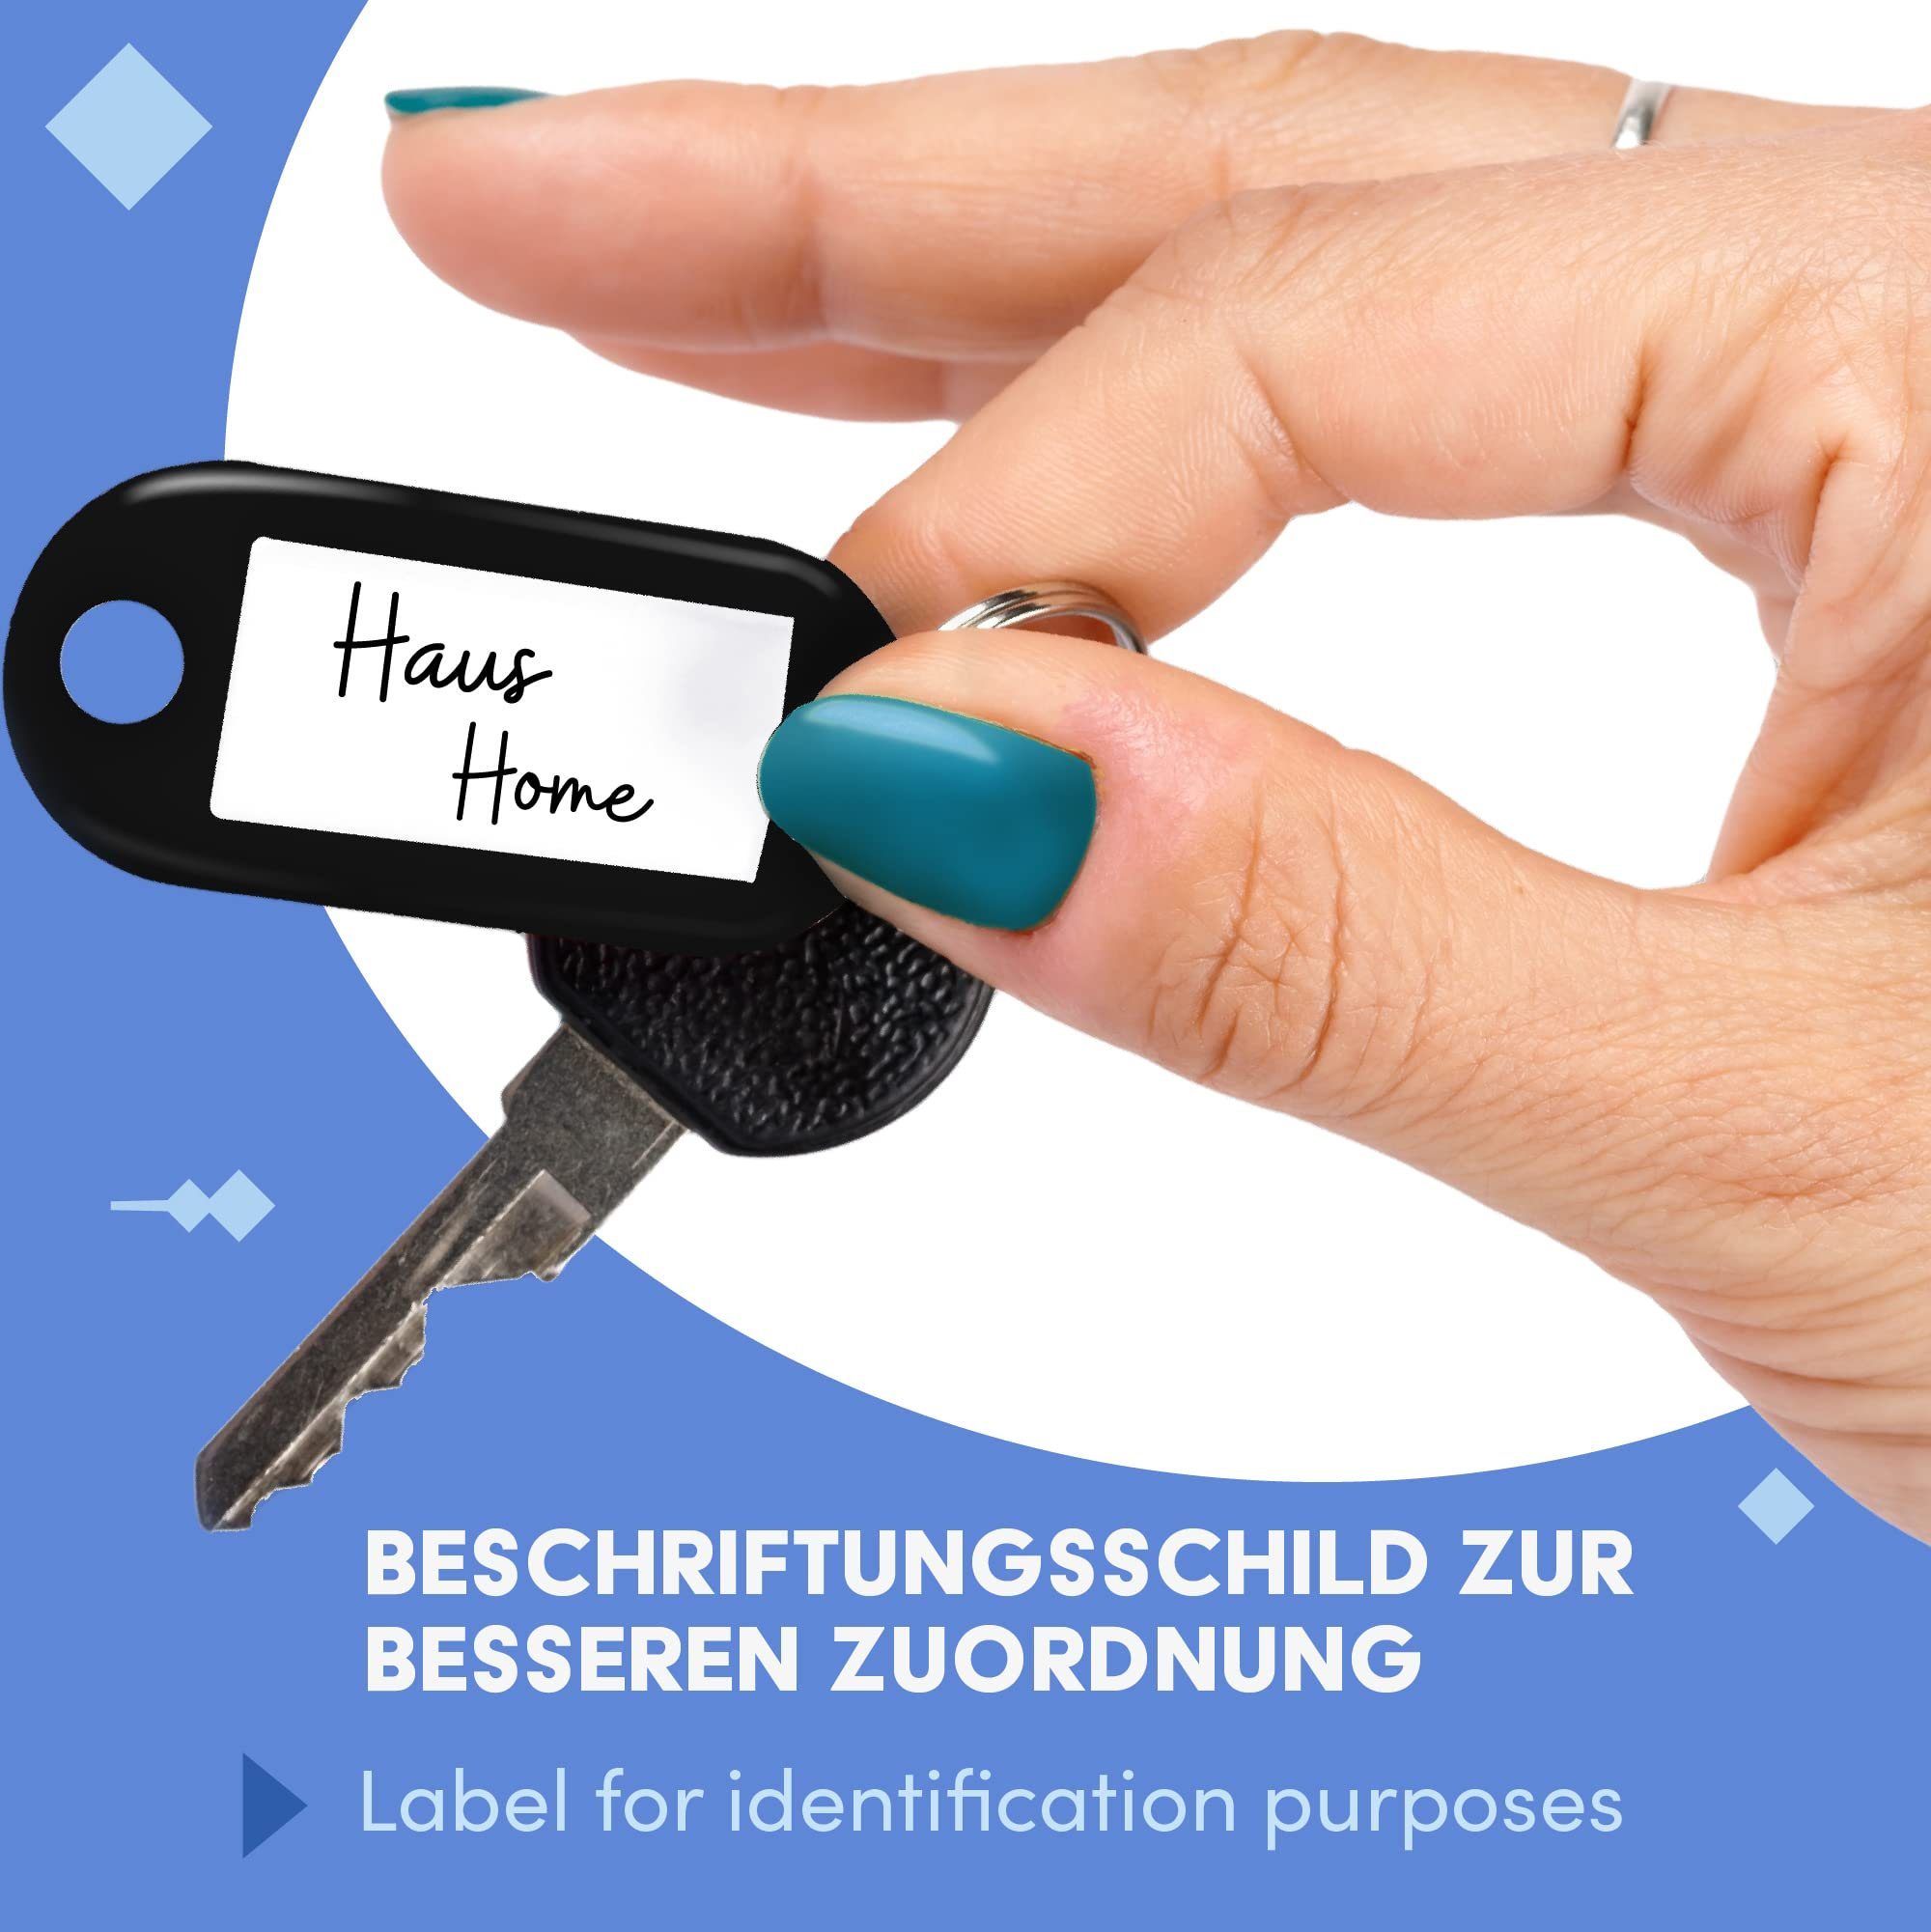 Schlüsselanhänger Etiketten Schlüsselanhänger beschriftbar - mit 20x WINTEX Schwarze Wintex